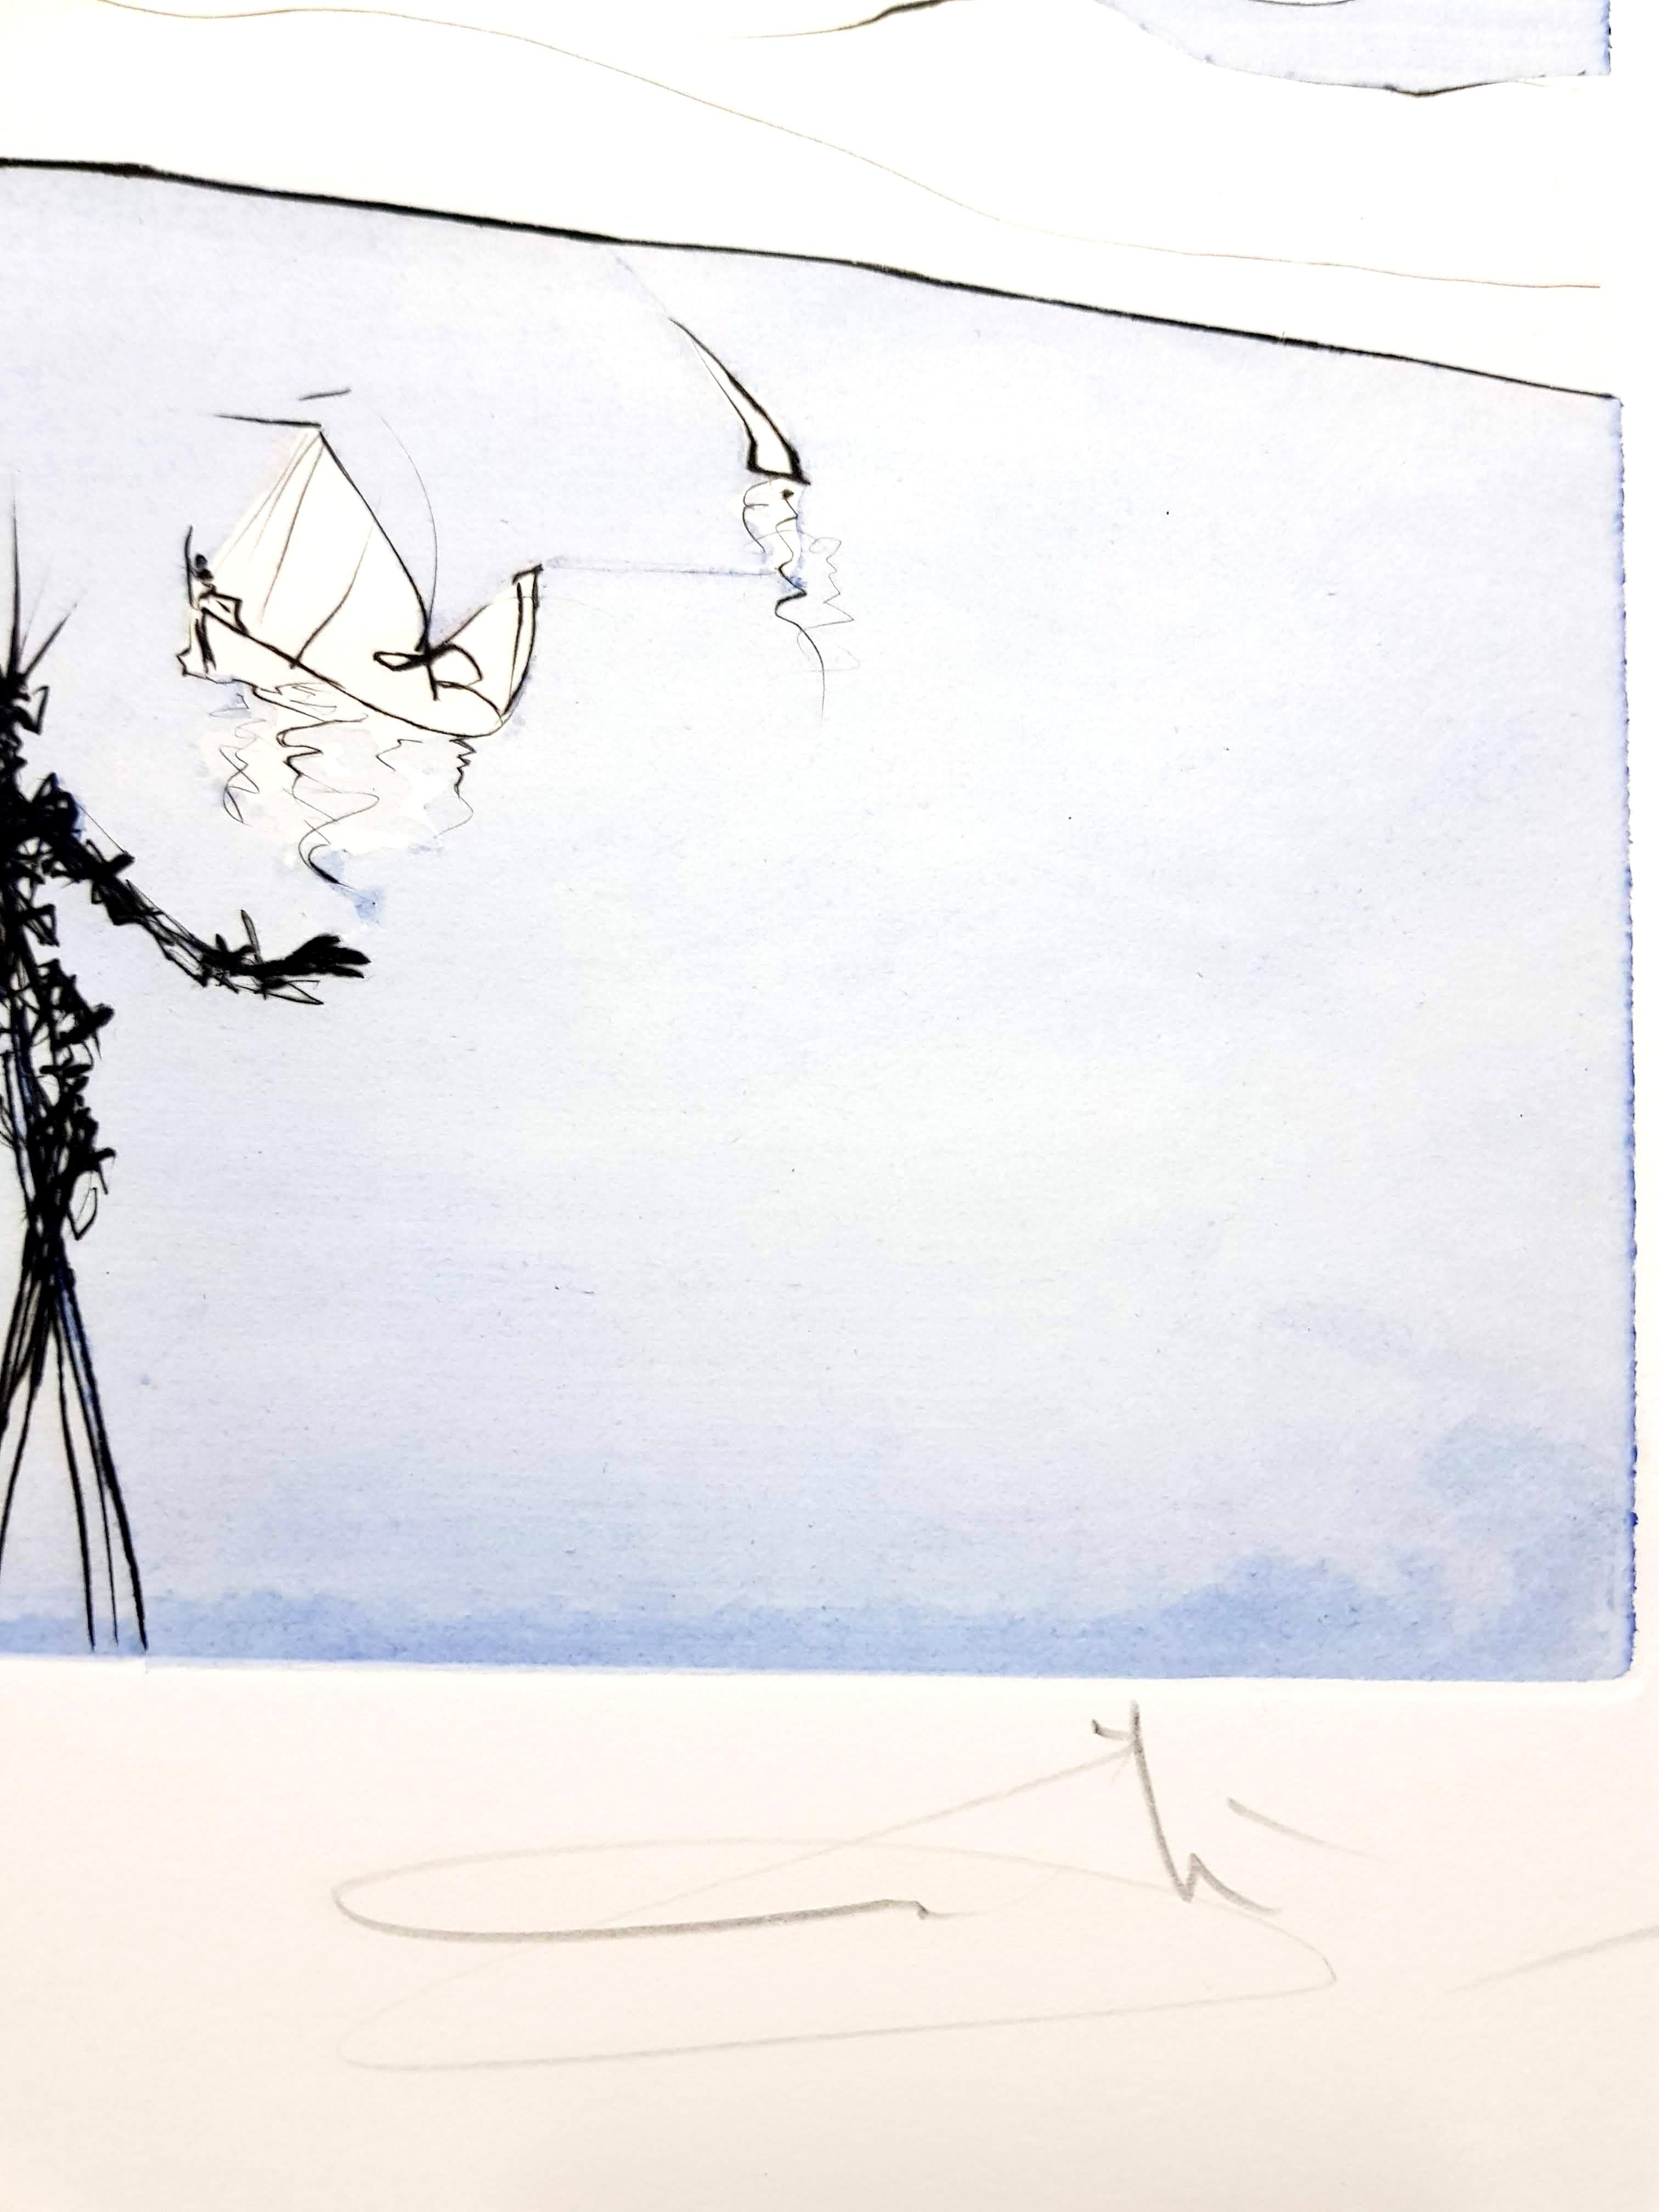 Salvador Dali - Flung out like - Original Signed Engraving - Surrealist Print by Salvador Dalí